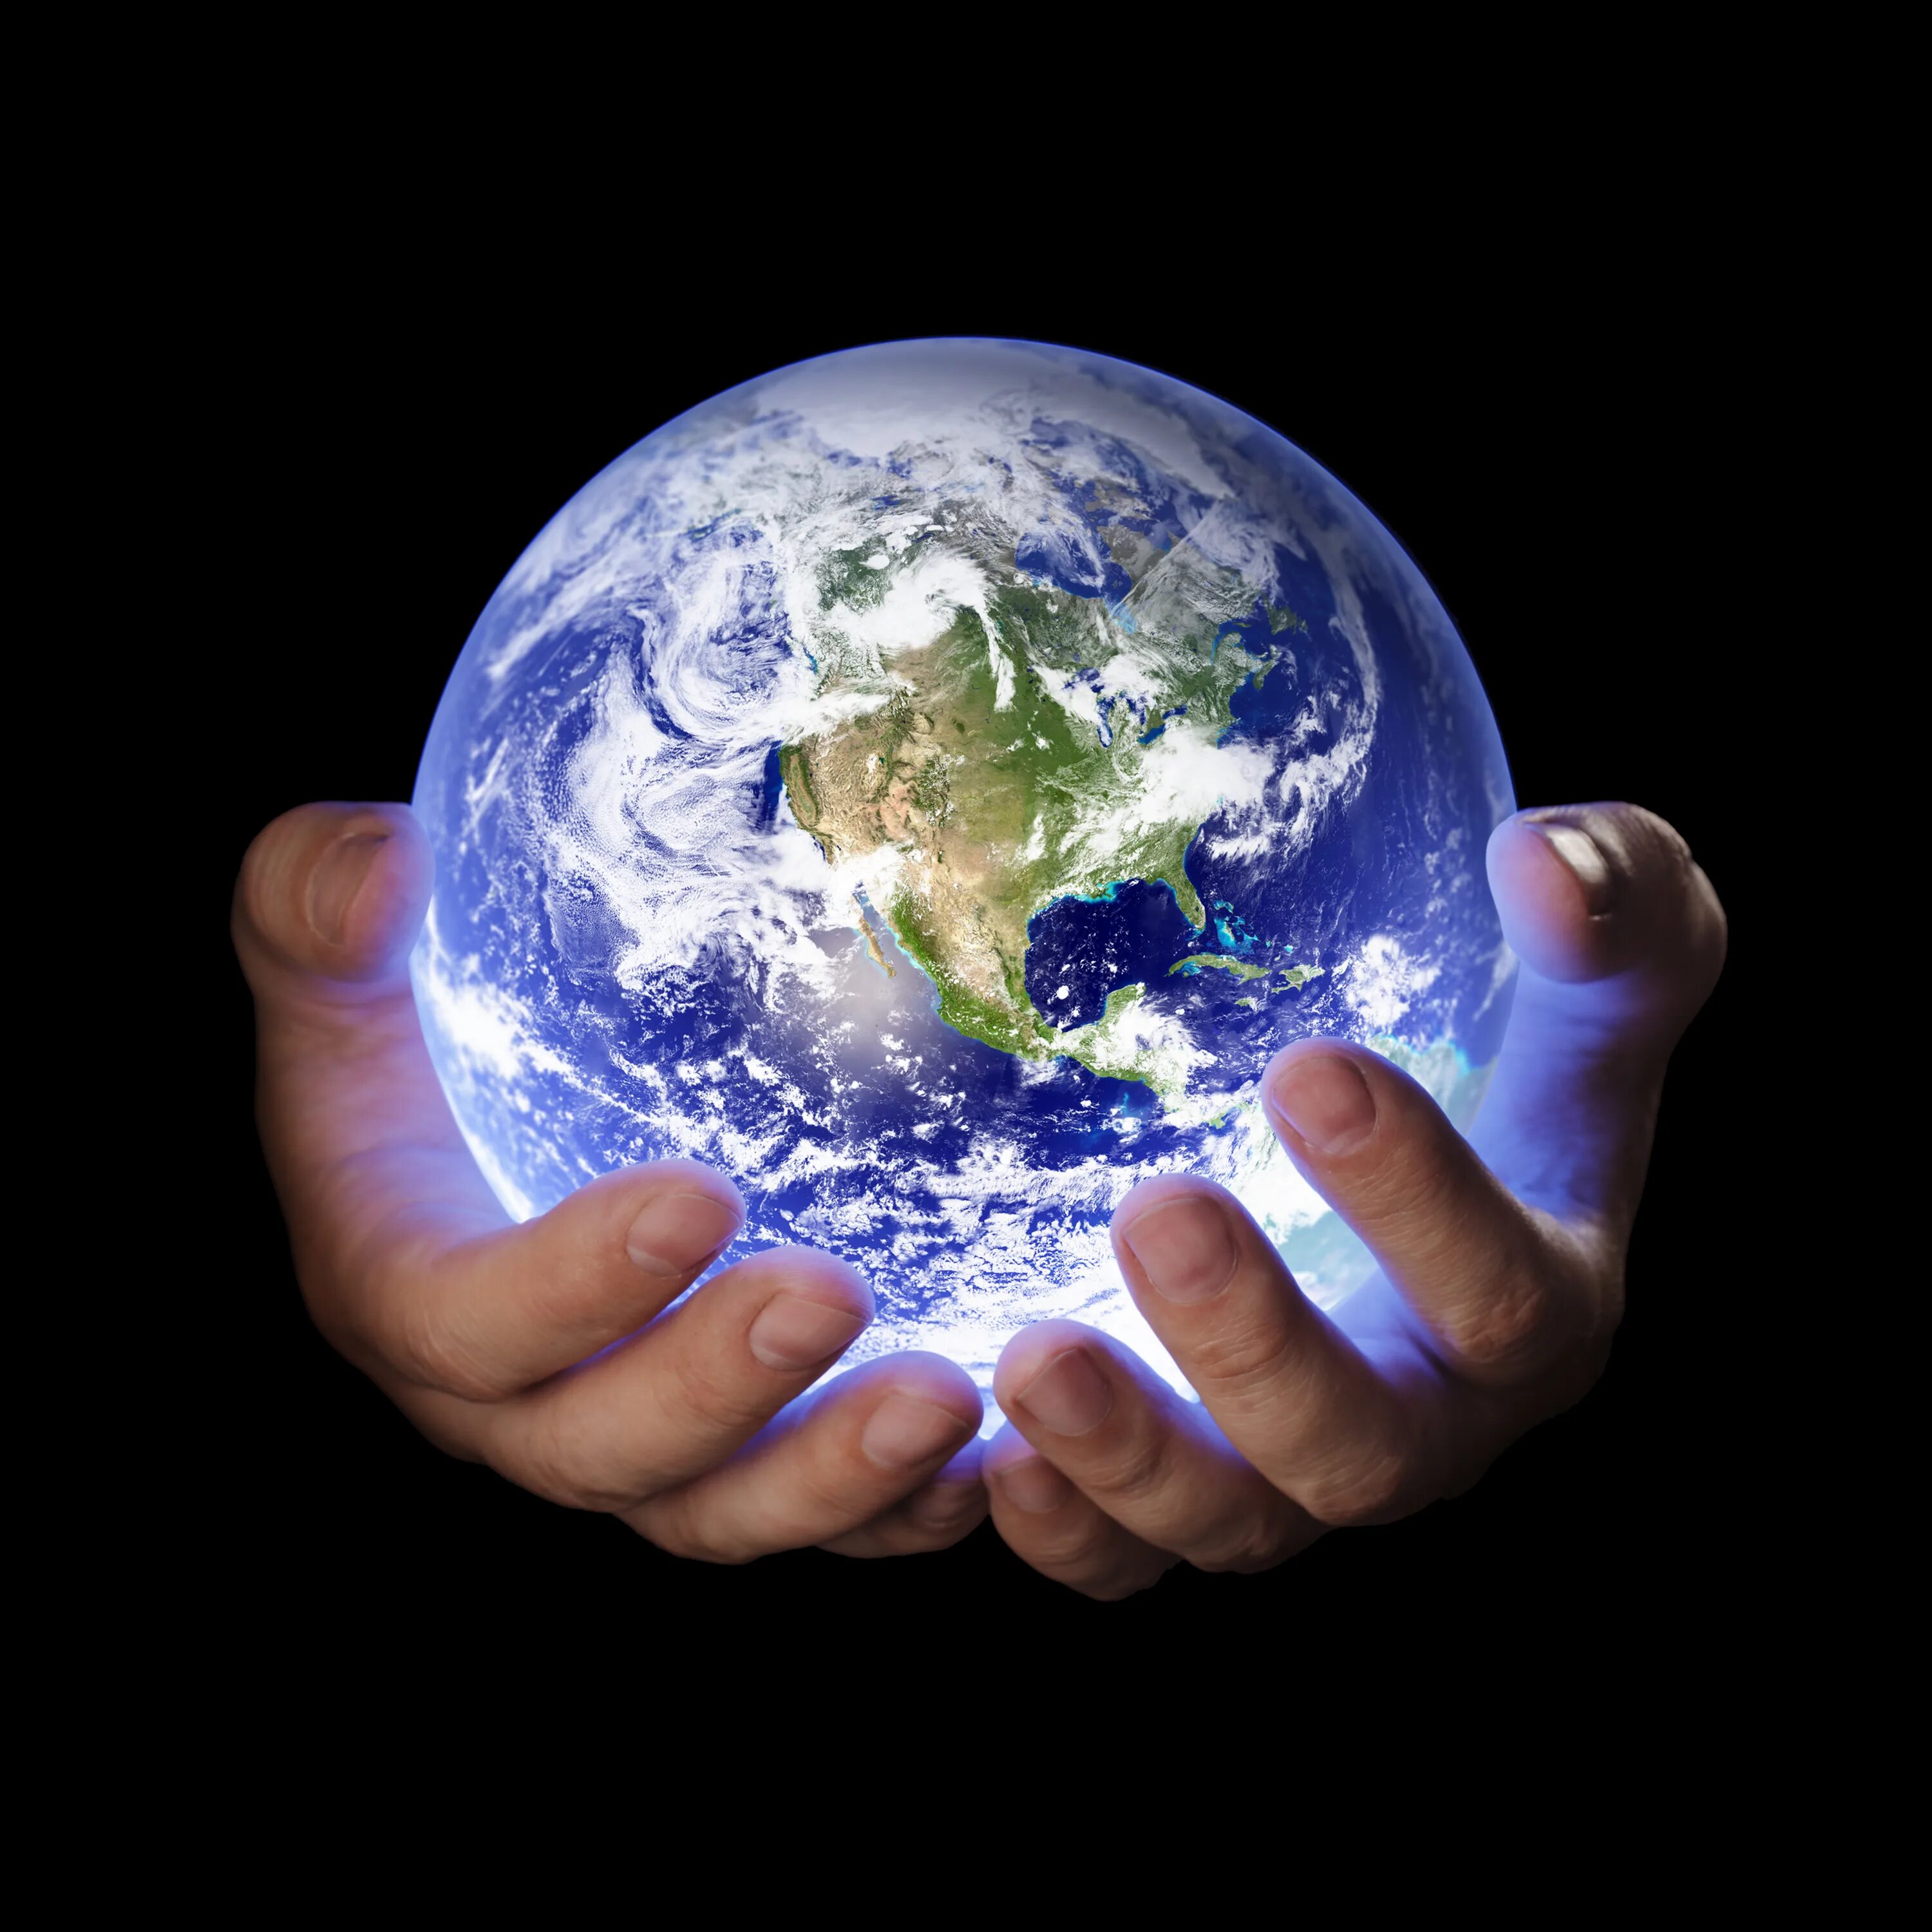 We see the world. Земной шар в руках. Земля в руках. Планета земля в руках. Планета в руках.